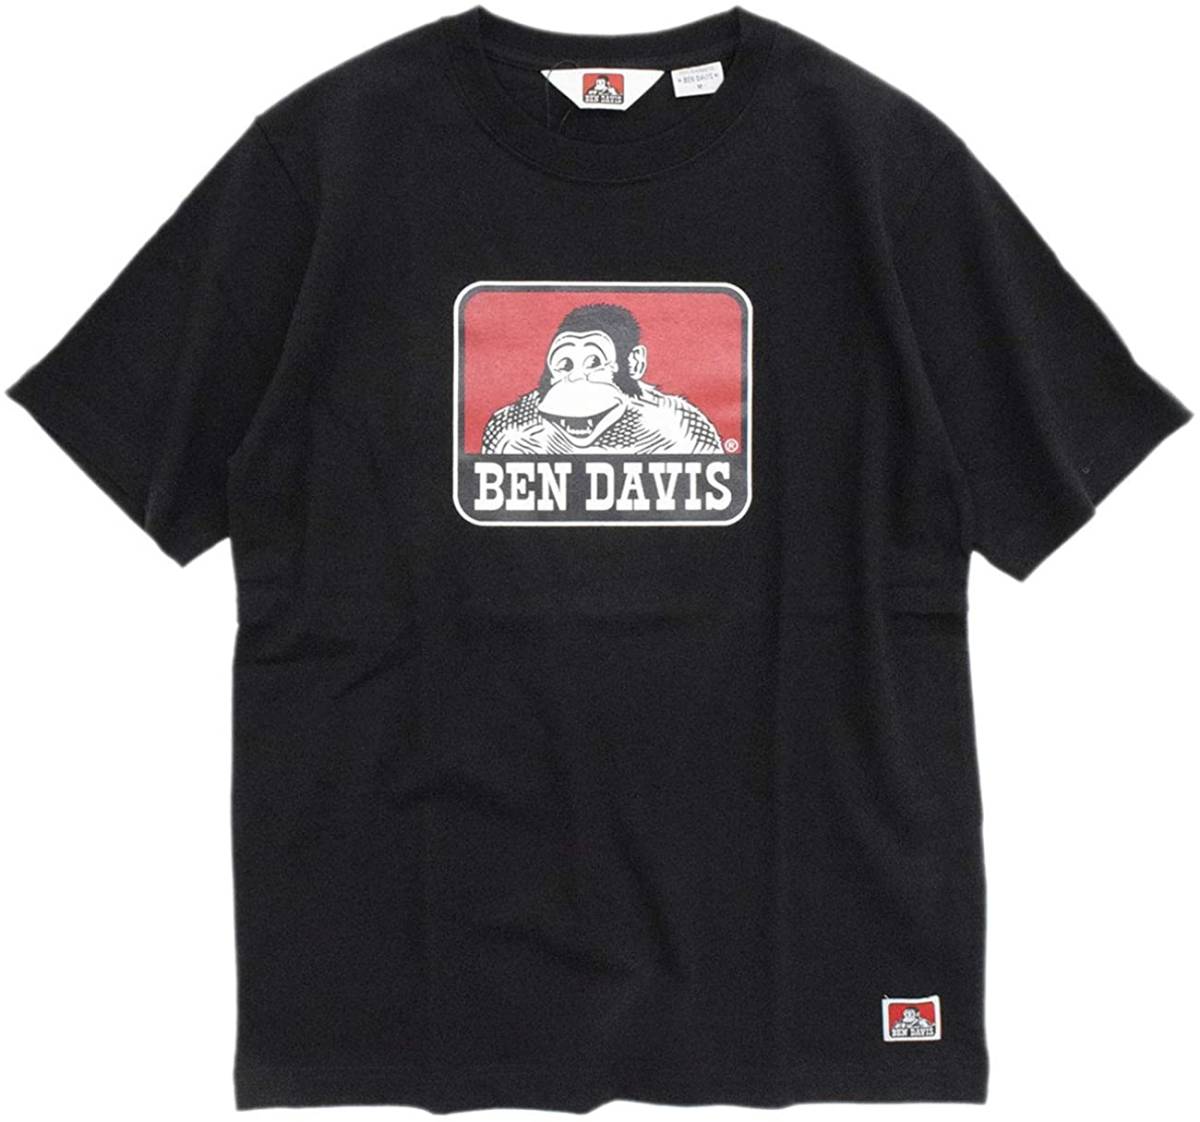 BEN DAVIS 国内外の人気 ベンデイビス - MEN XLサイズ 半袖Tシャツ 黒色 市販 タグ付き未使用品 人気完売品